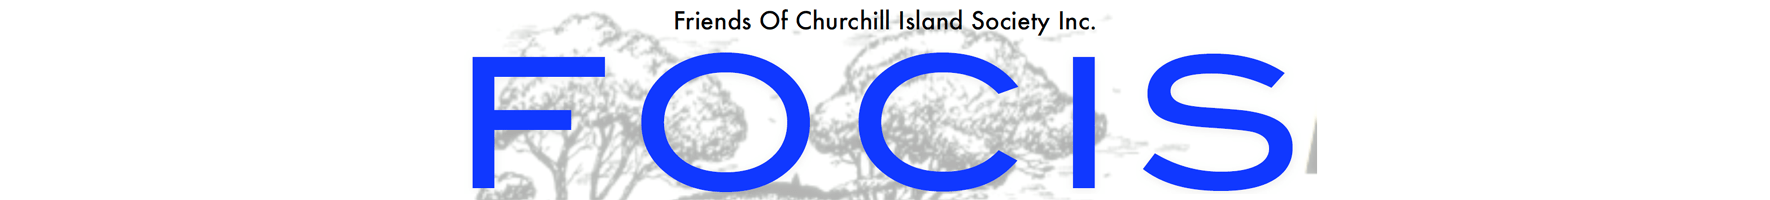 Friends of Churchill Island Society Inc.